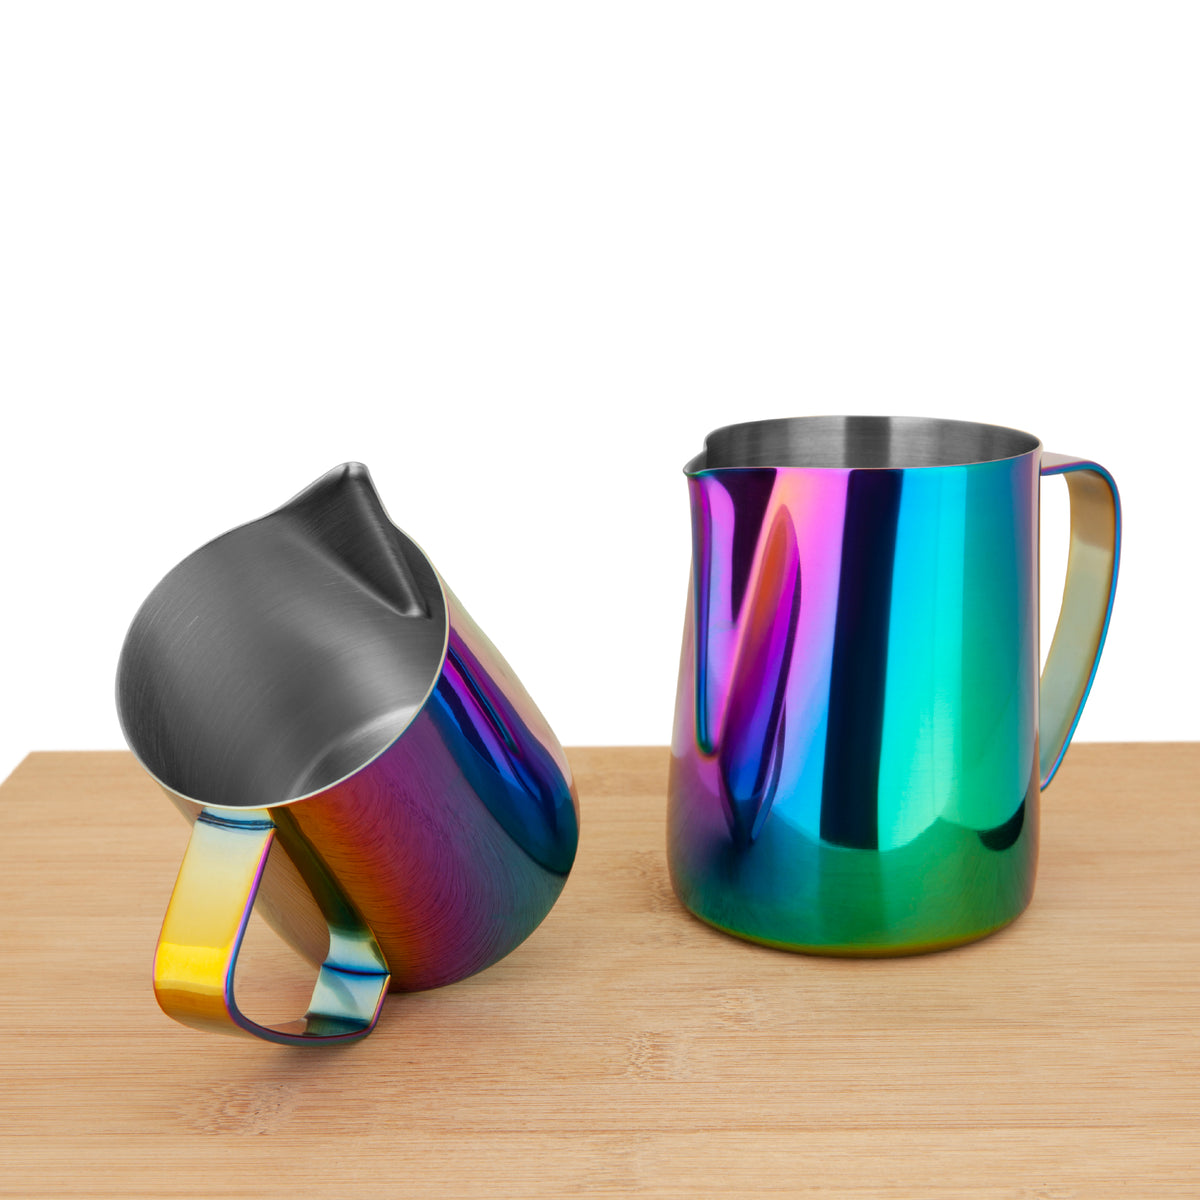 EspressoWorks Stainless Steel Milk Frothing Jug - Rainbow (350ml and 600ml)